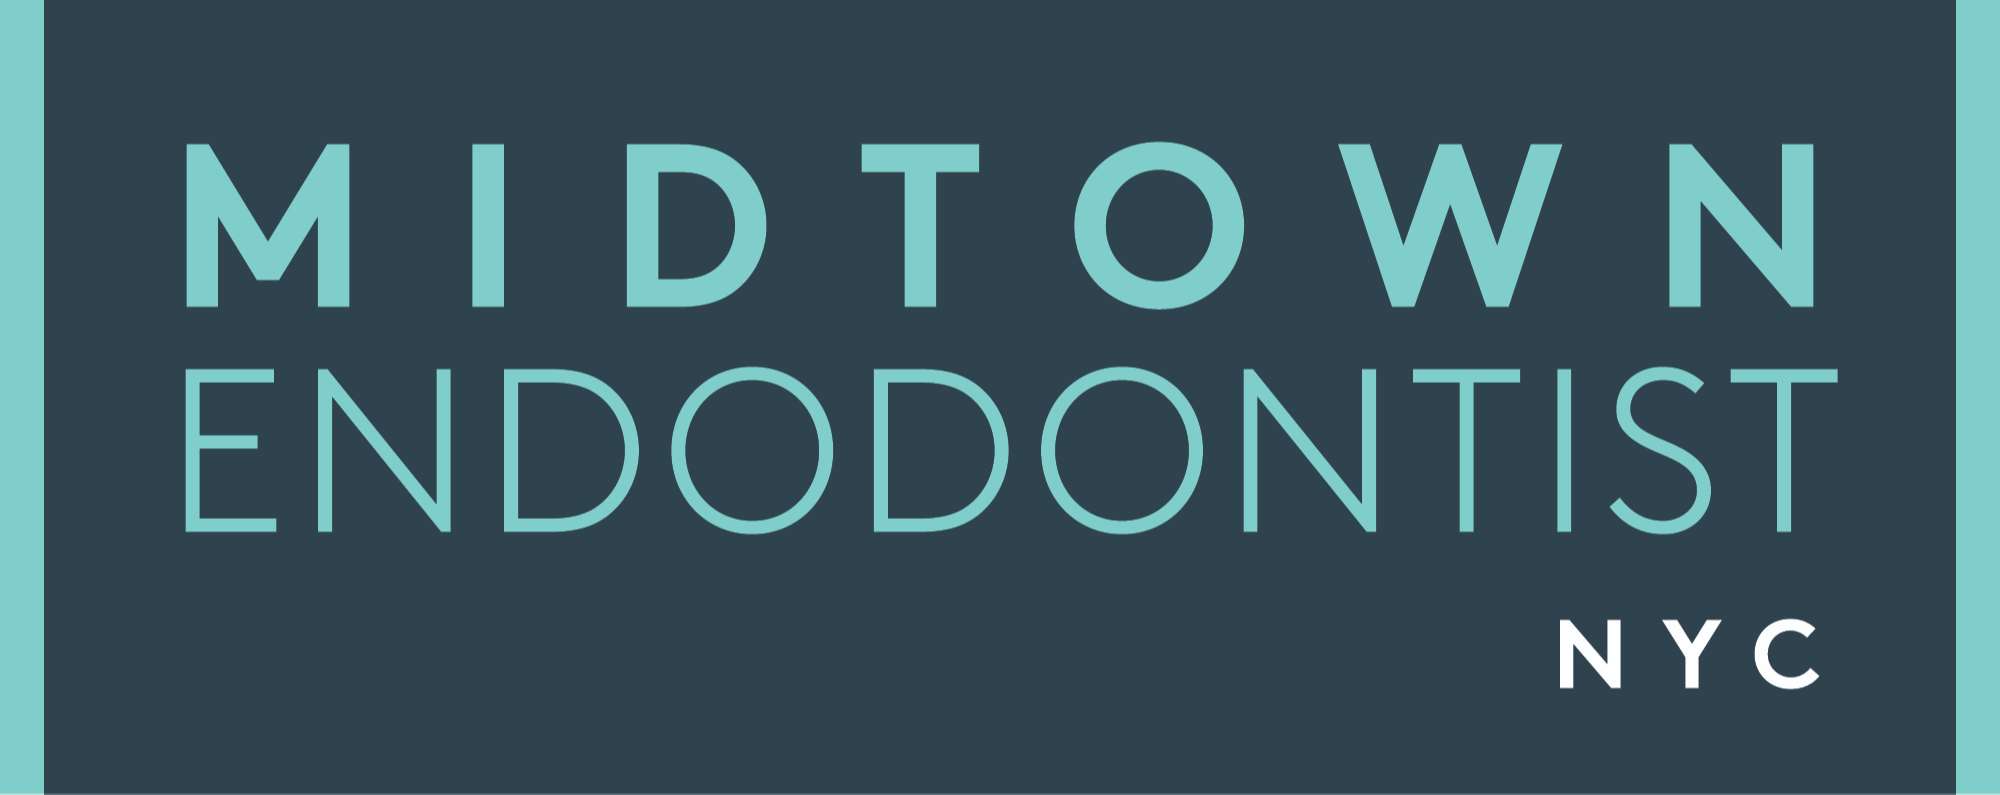 Midtown Endodontist NYC